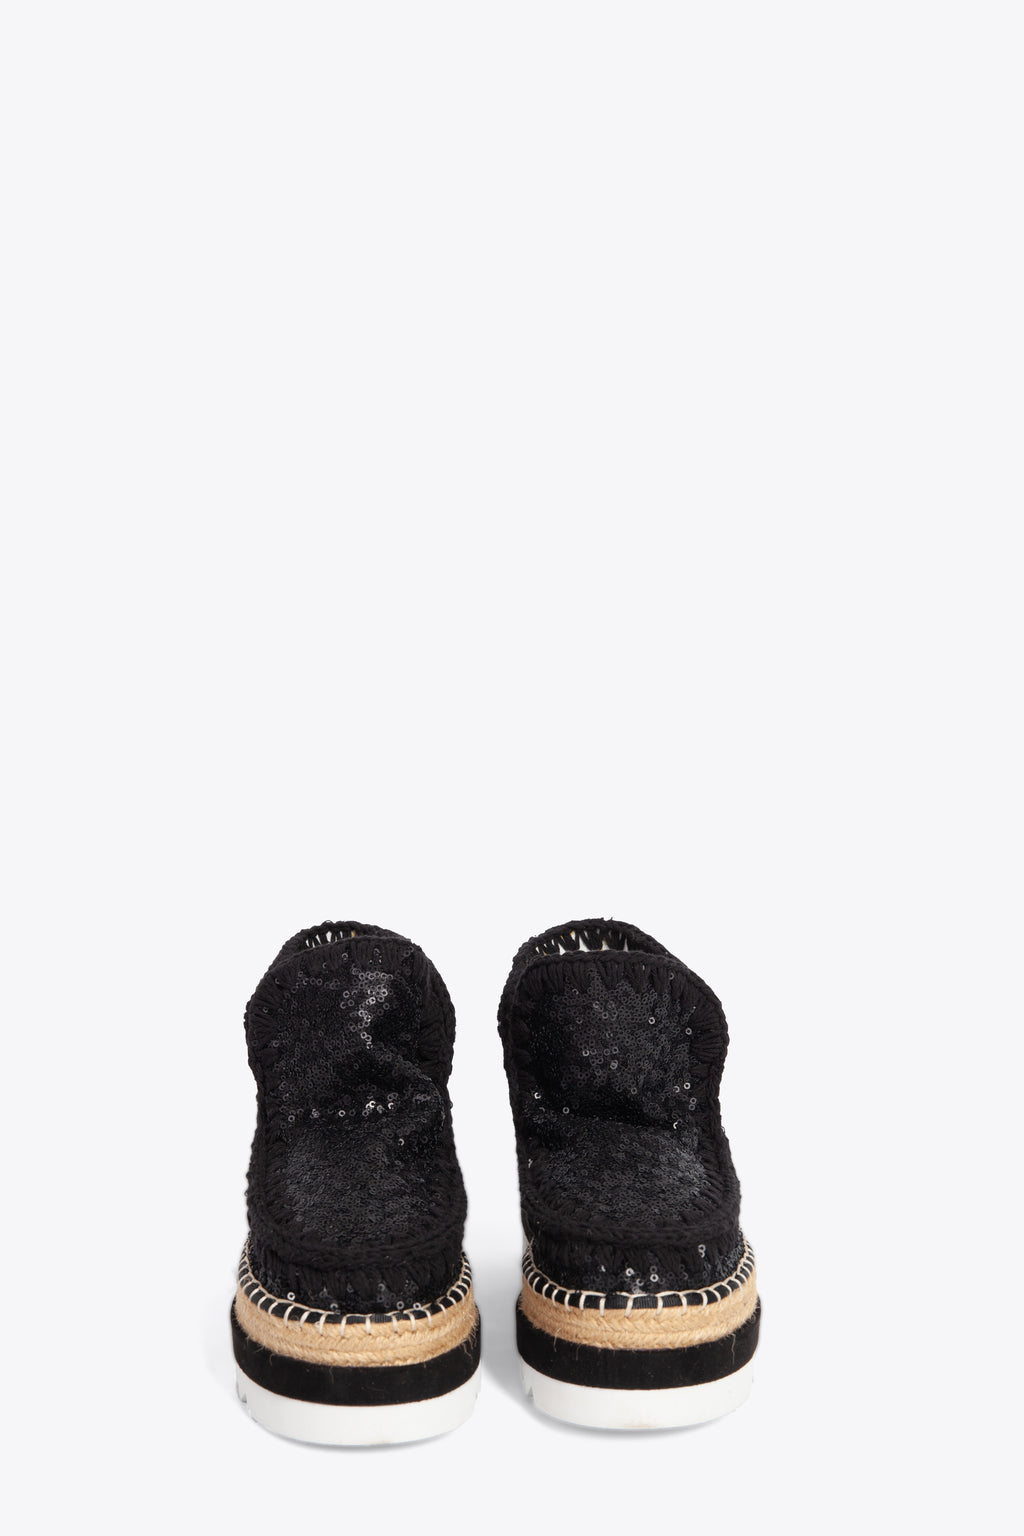 alt-image__Black-sequins-slip-on-ankle-boots---Eskimo-jute-sequins